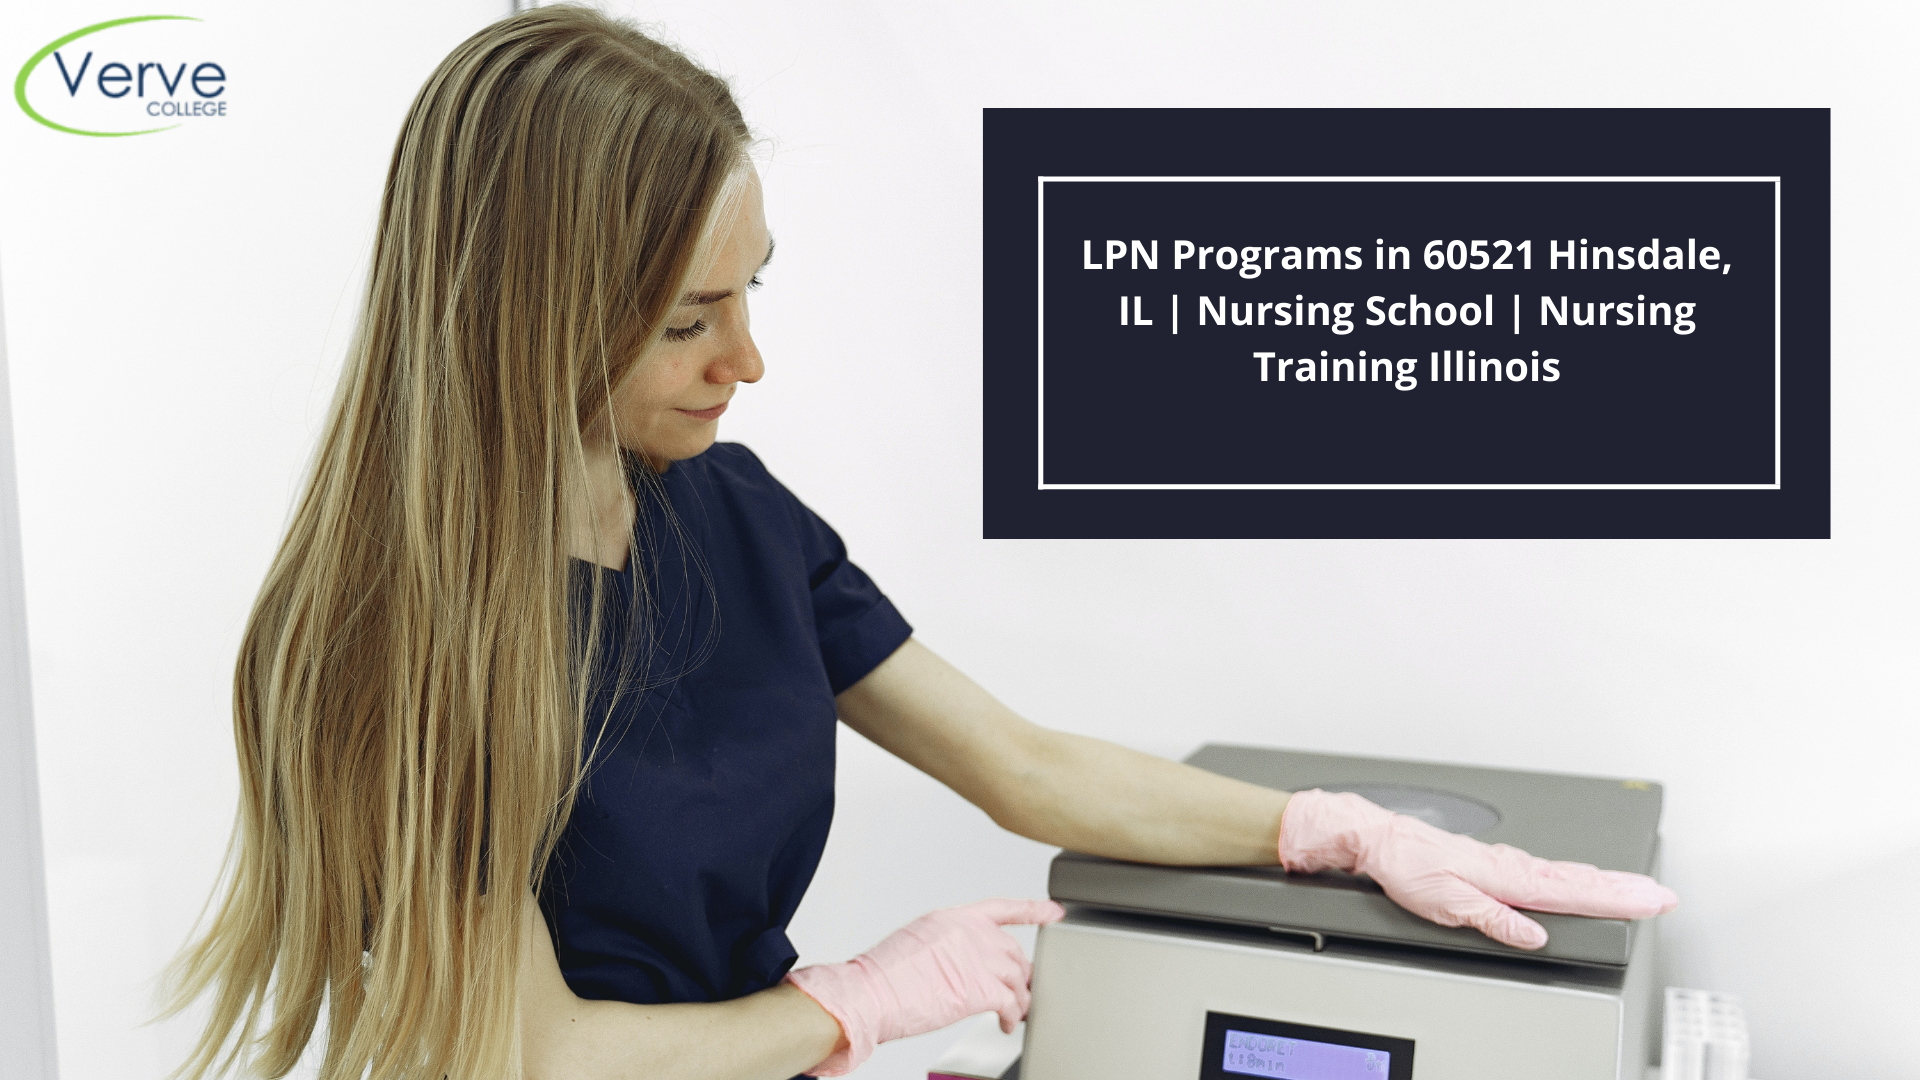 LPN Programs in 60521 Hinsdale, IL | Nursing School | Nursing Training Illinois